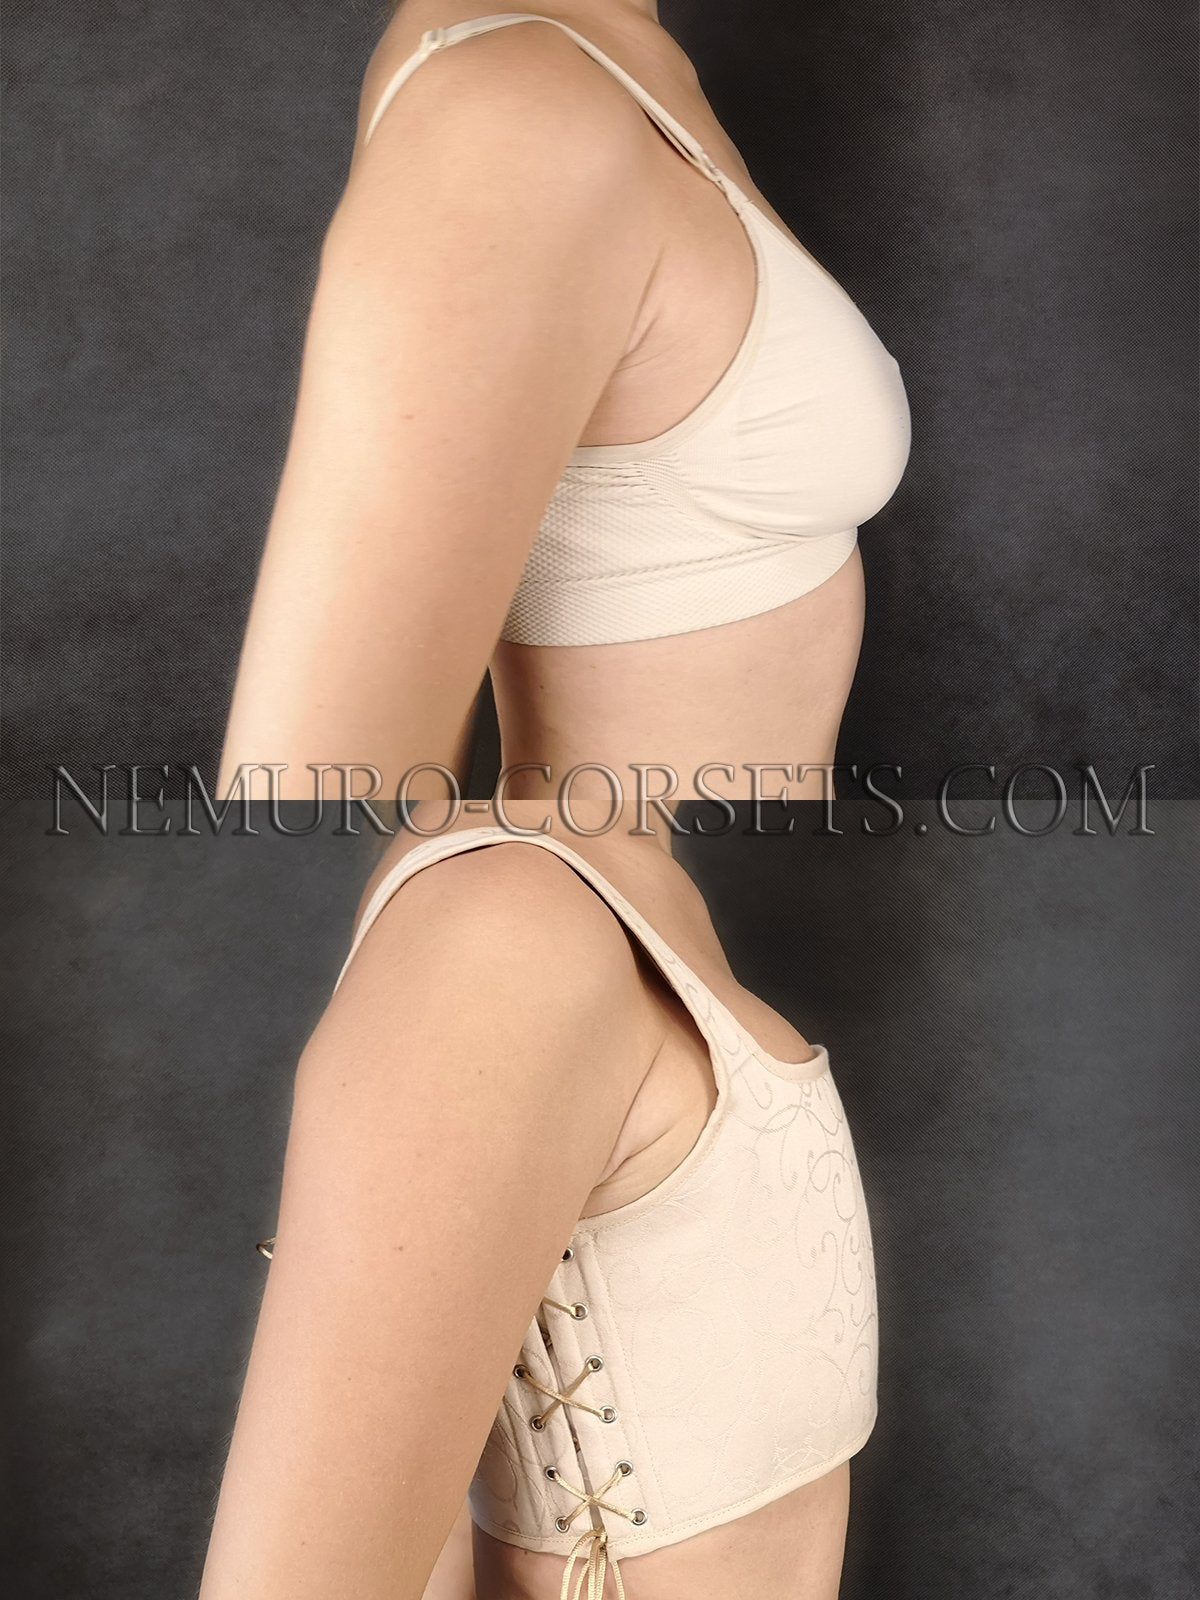 Bust binder corseted breast flattener - Custom at Nemuro-Corsets